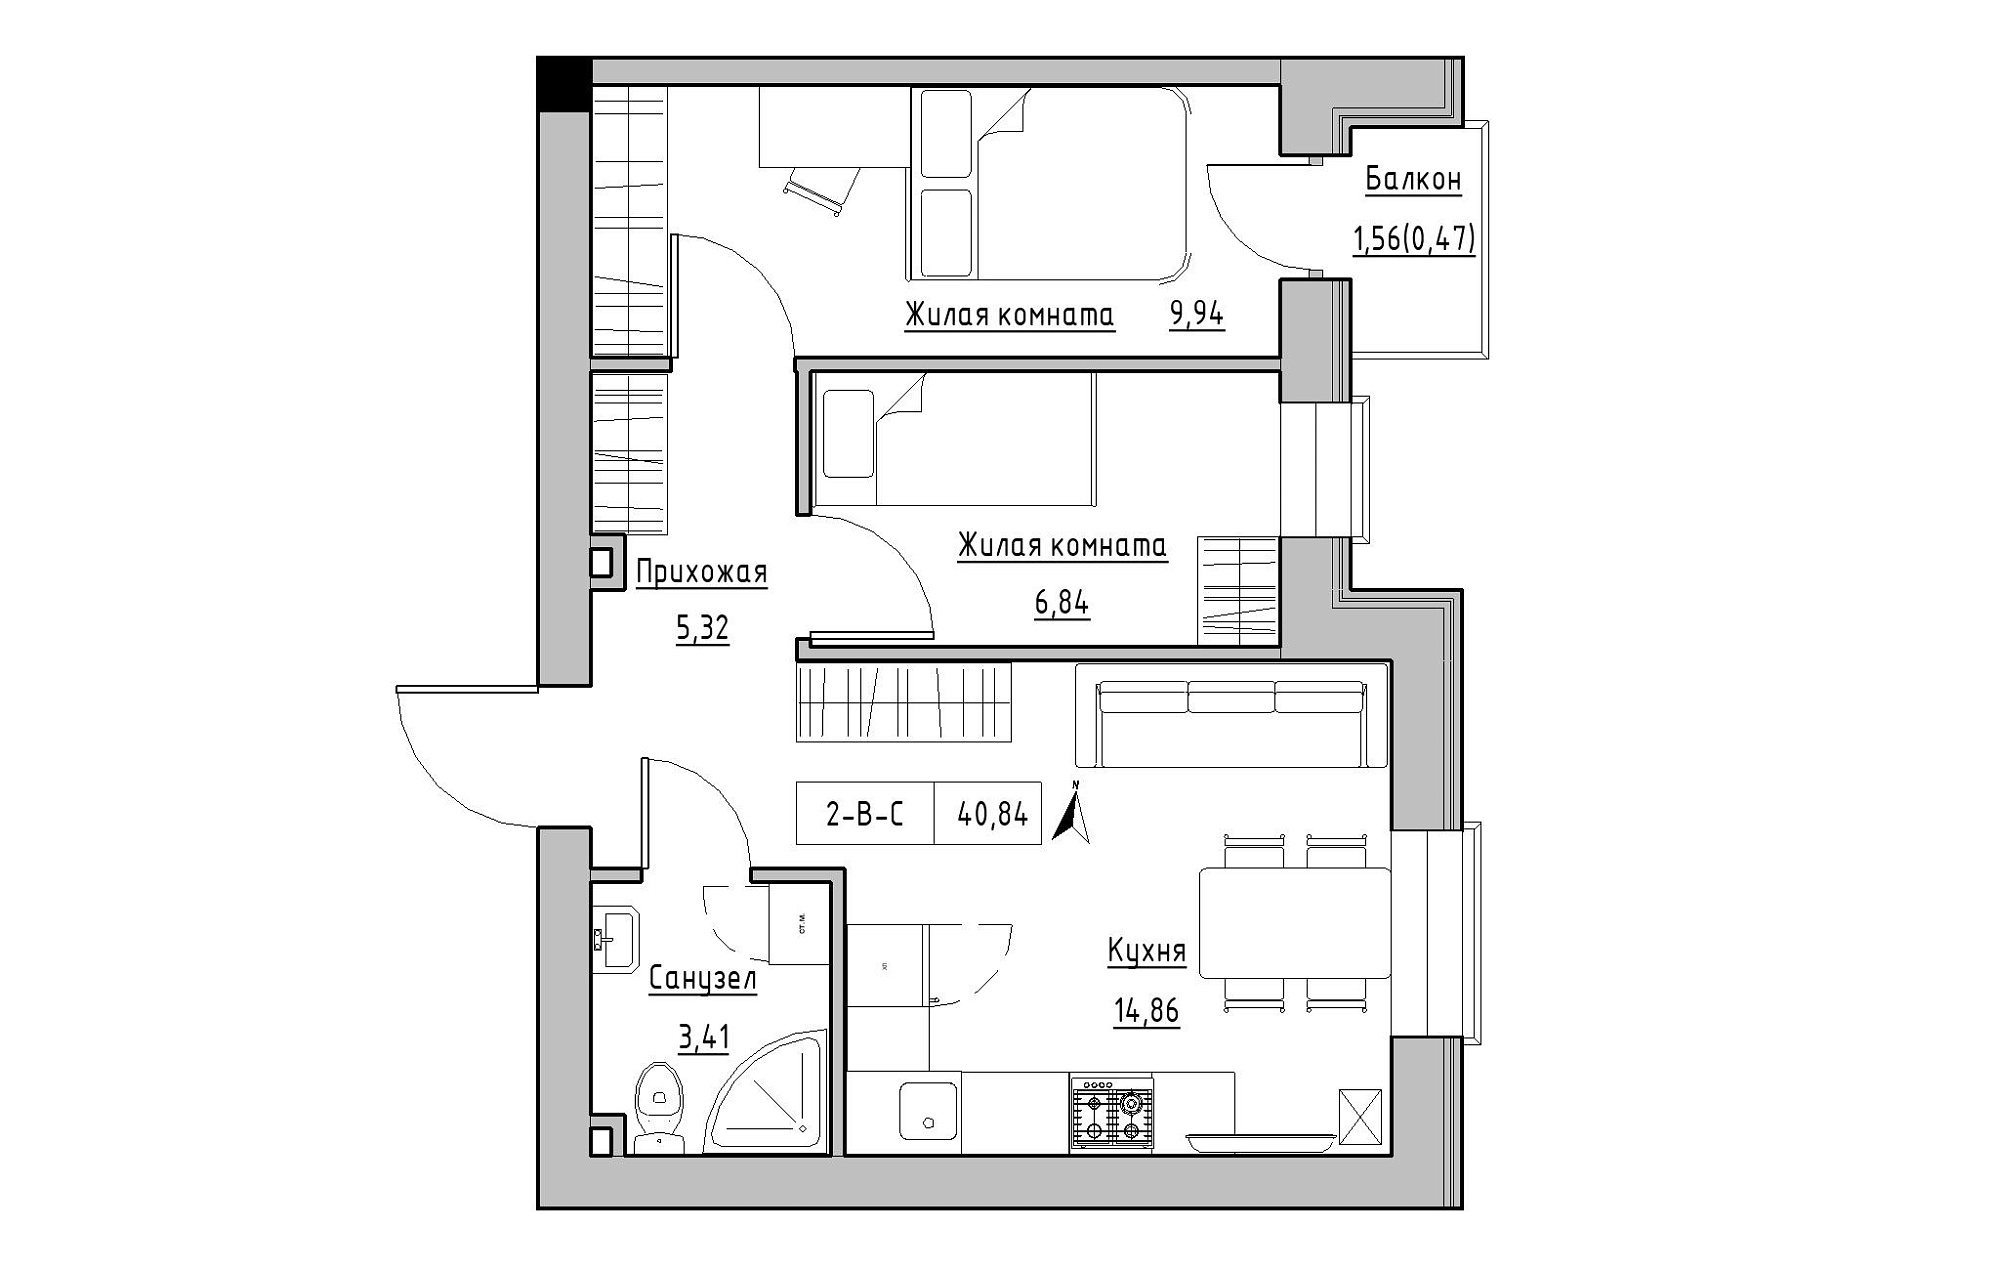 Planning 2-rm flats area 40.84m2, KS-019-04/0006.